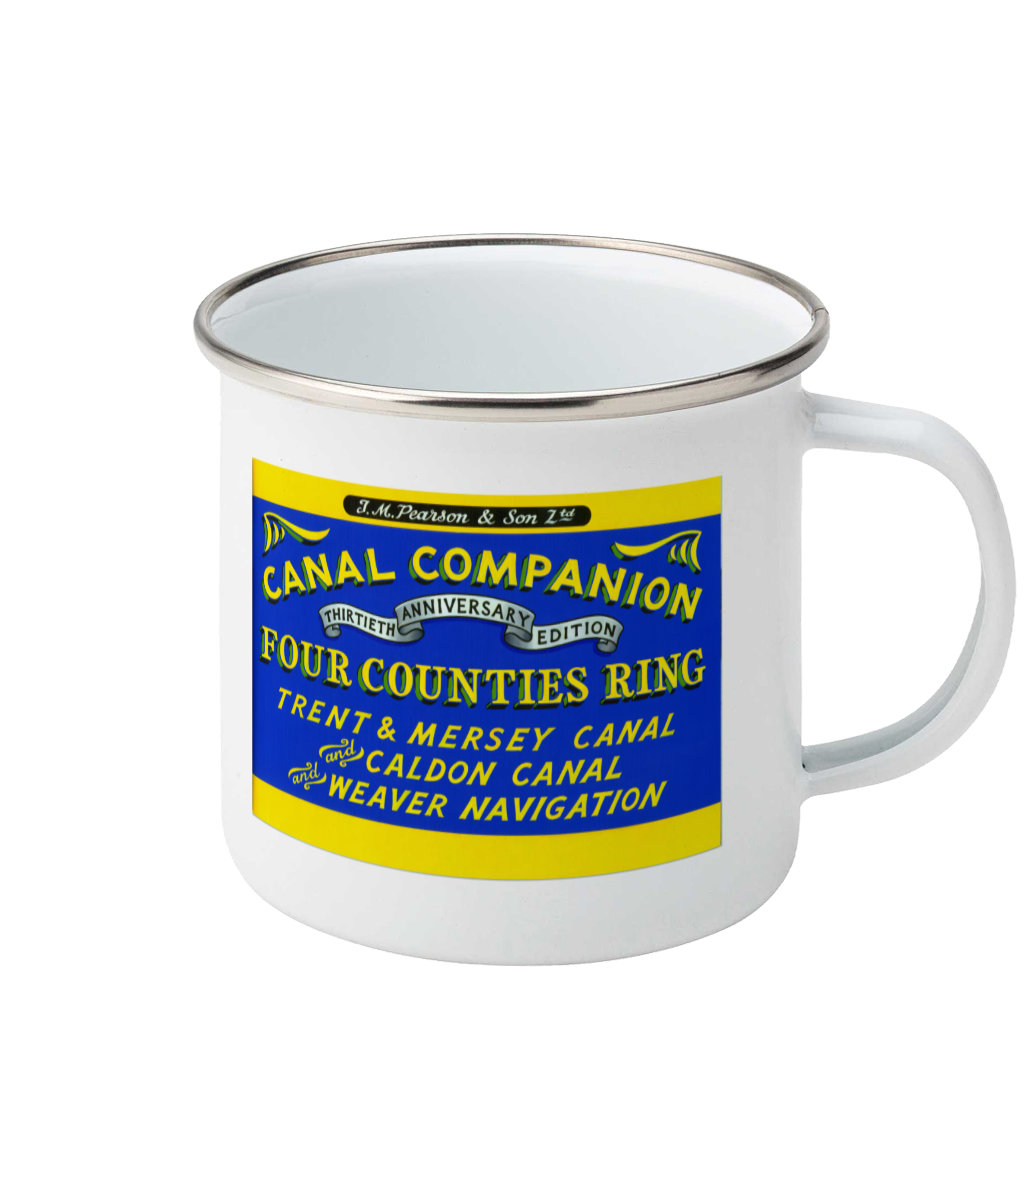 Pearson Canal Companion Enamel Mug - Four Counties Ring